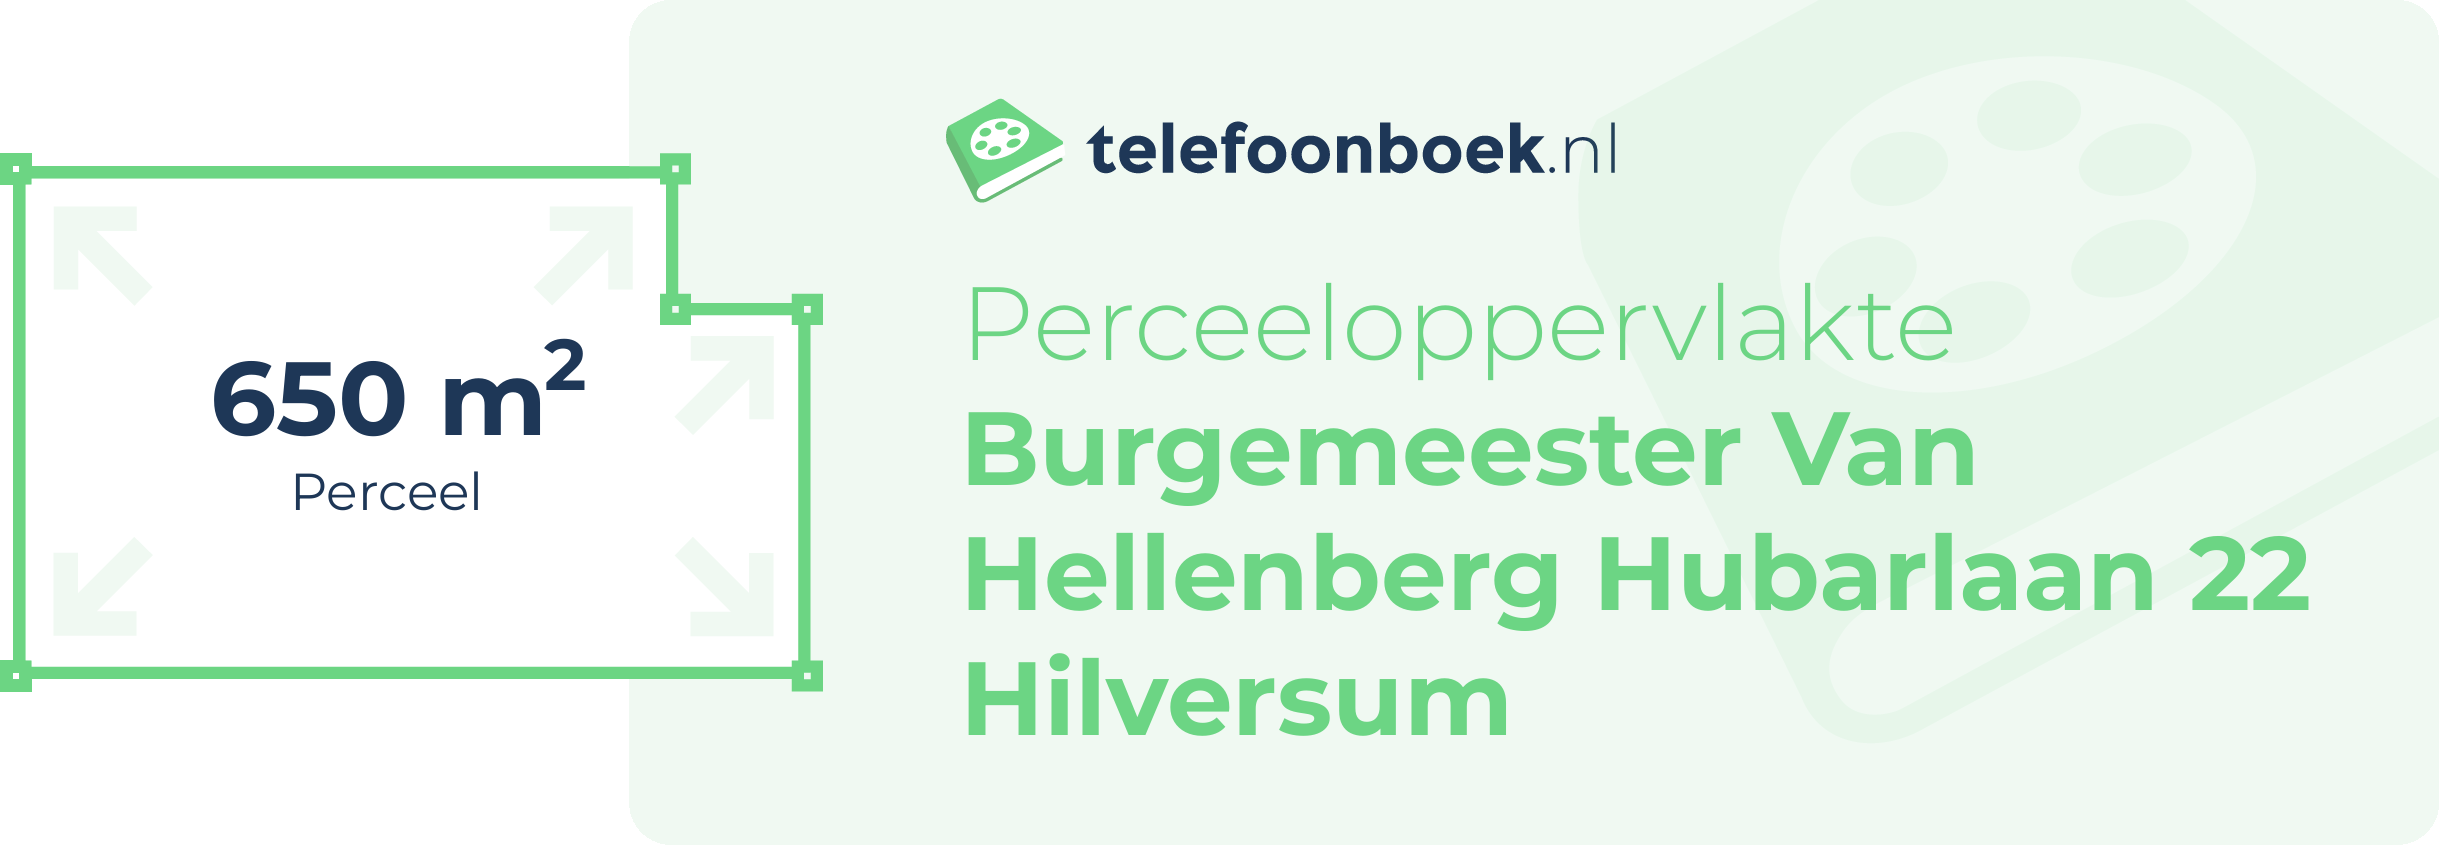 Perceeloppervlakte Burgemeester Van Hellenberg Hubarlaan 22 Hilversum